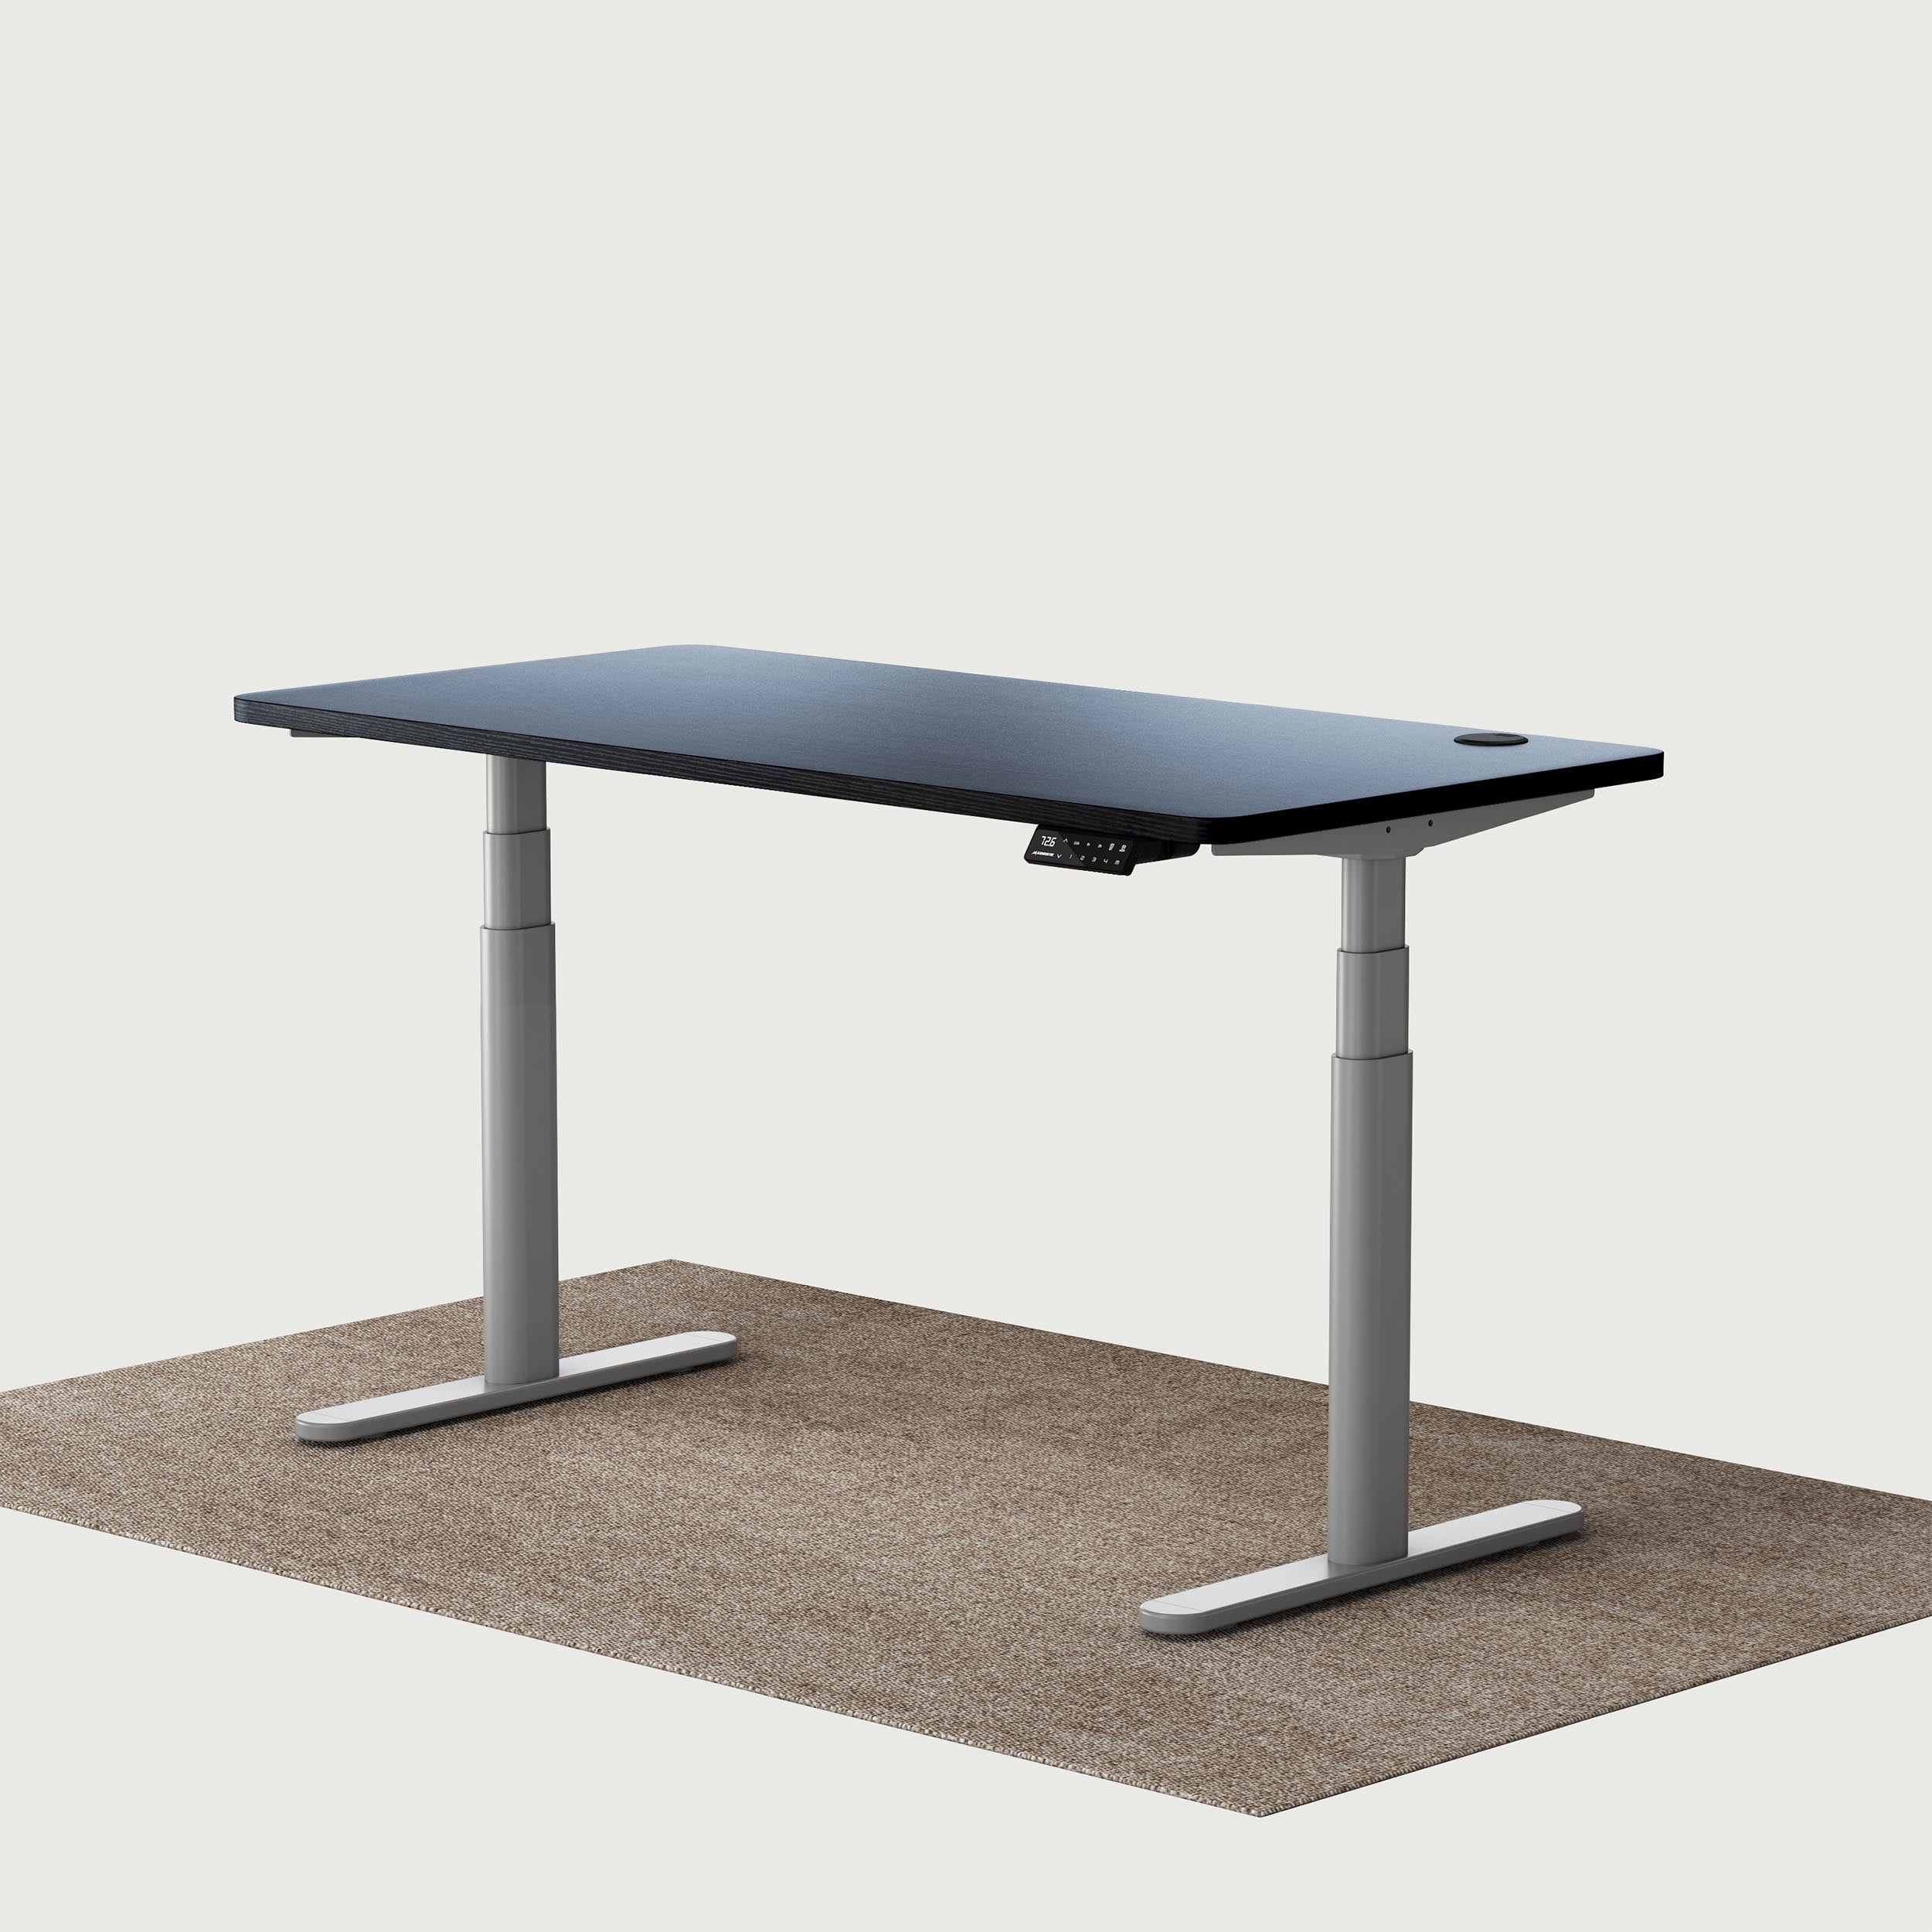 TH2 Pro Plus grey oval electric standing desk frame with black 140x70 cm desktop